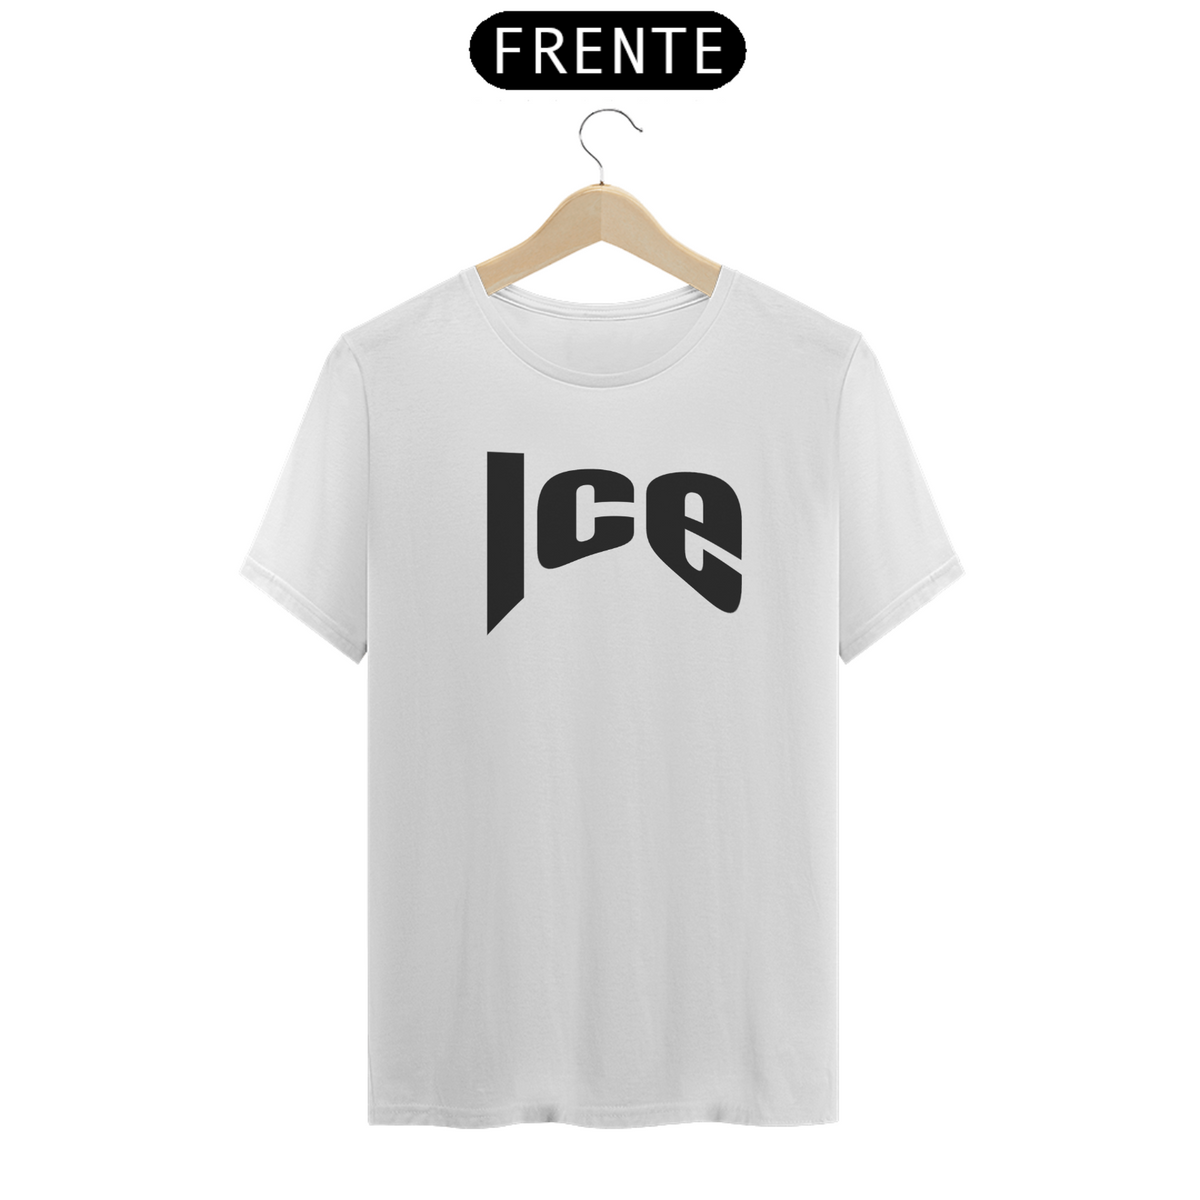 Nome do produto: Camisa/ice